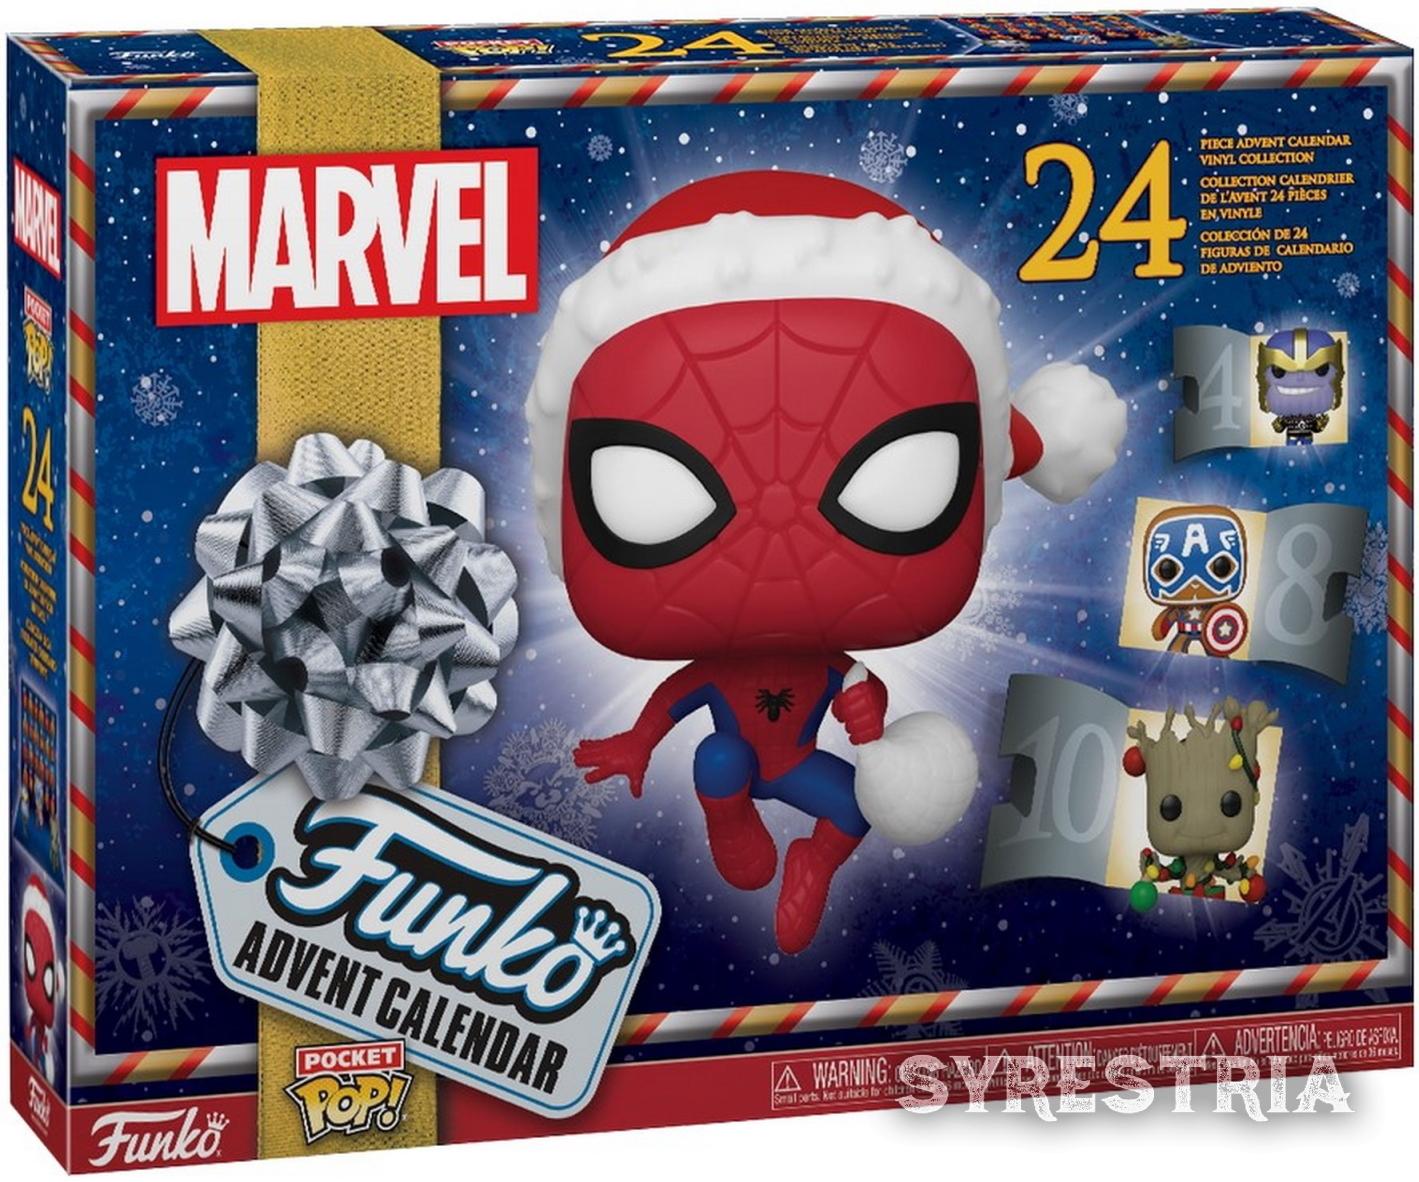 Marvel Adventskalender Kalender Holiday 24 Funko Pocket Pop!